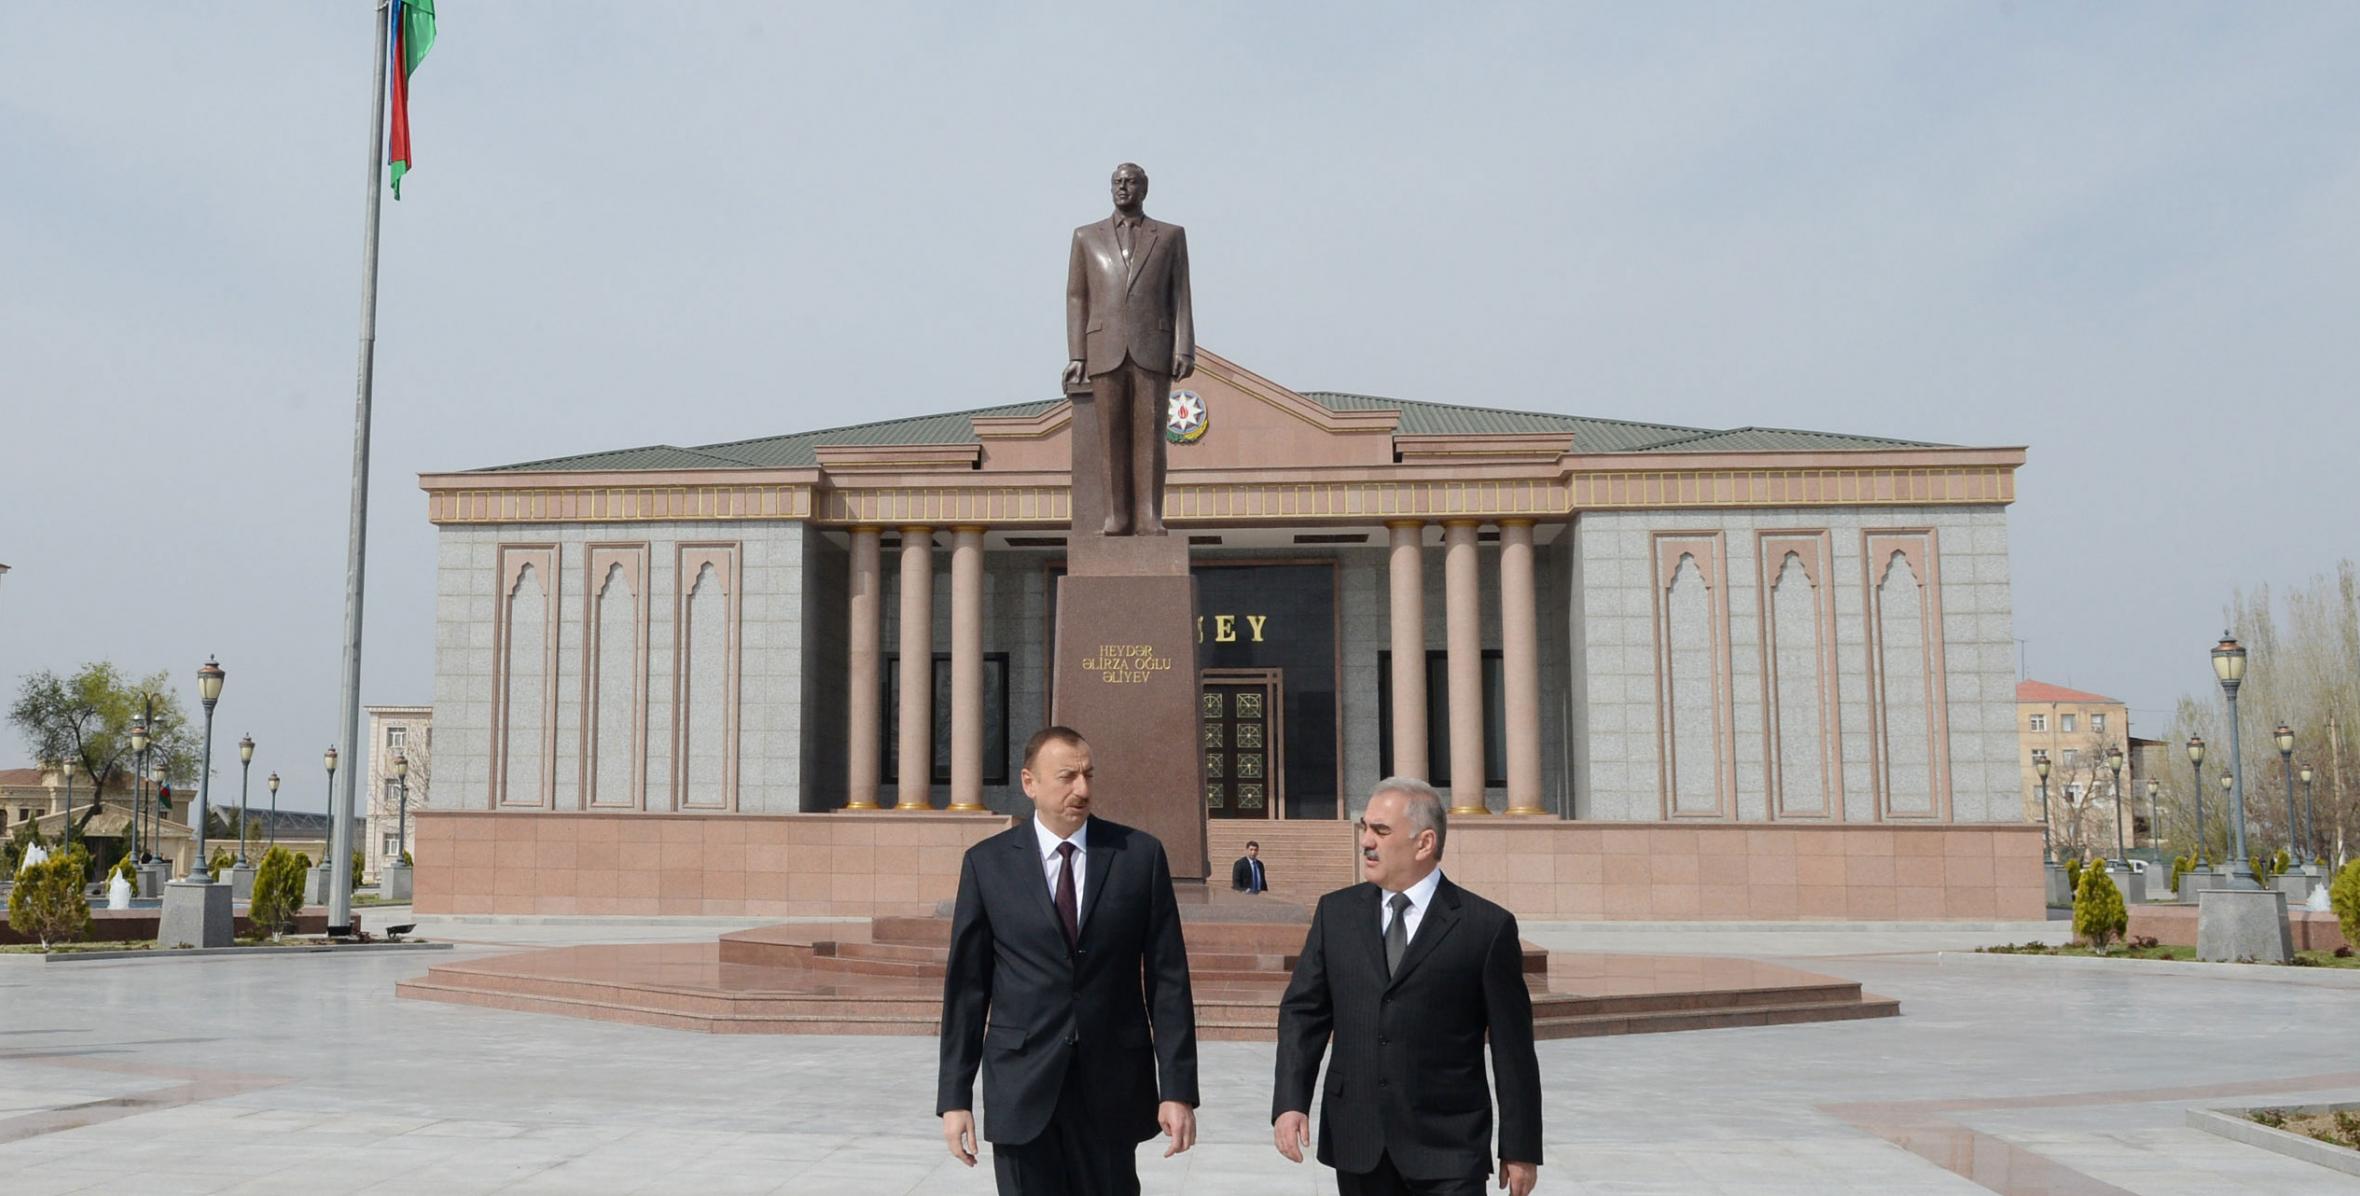 Ilham Aliyev visited the monument to national leader Heydar Aliyev in Nakhchivan city